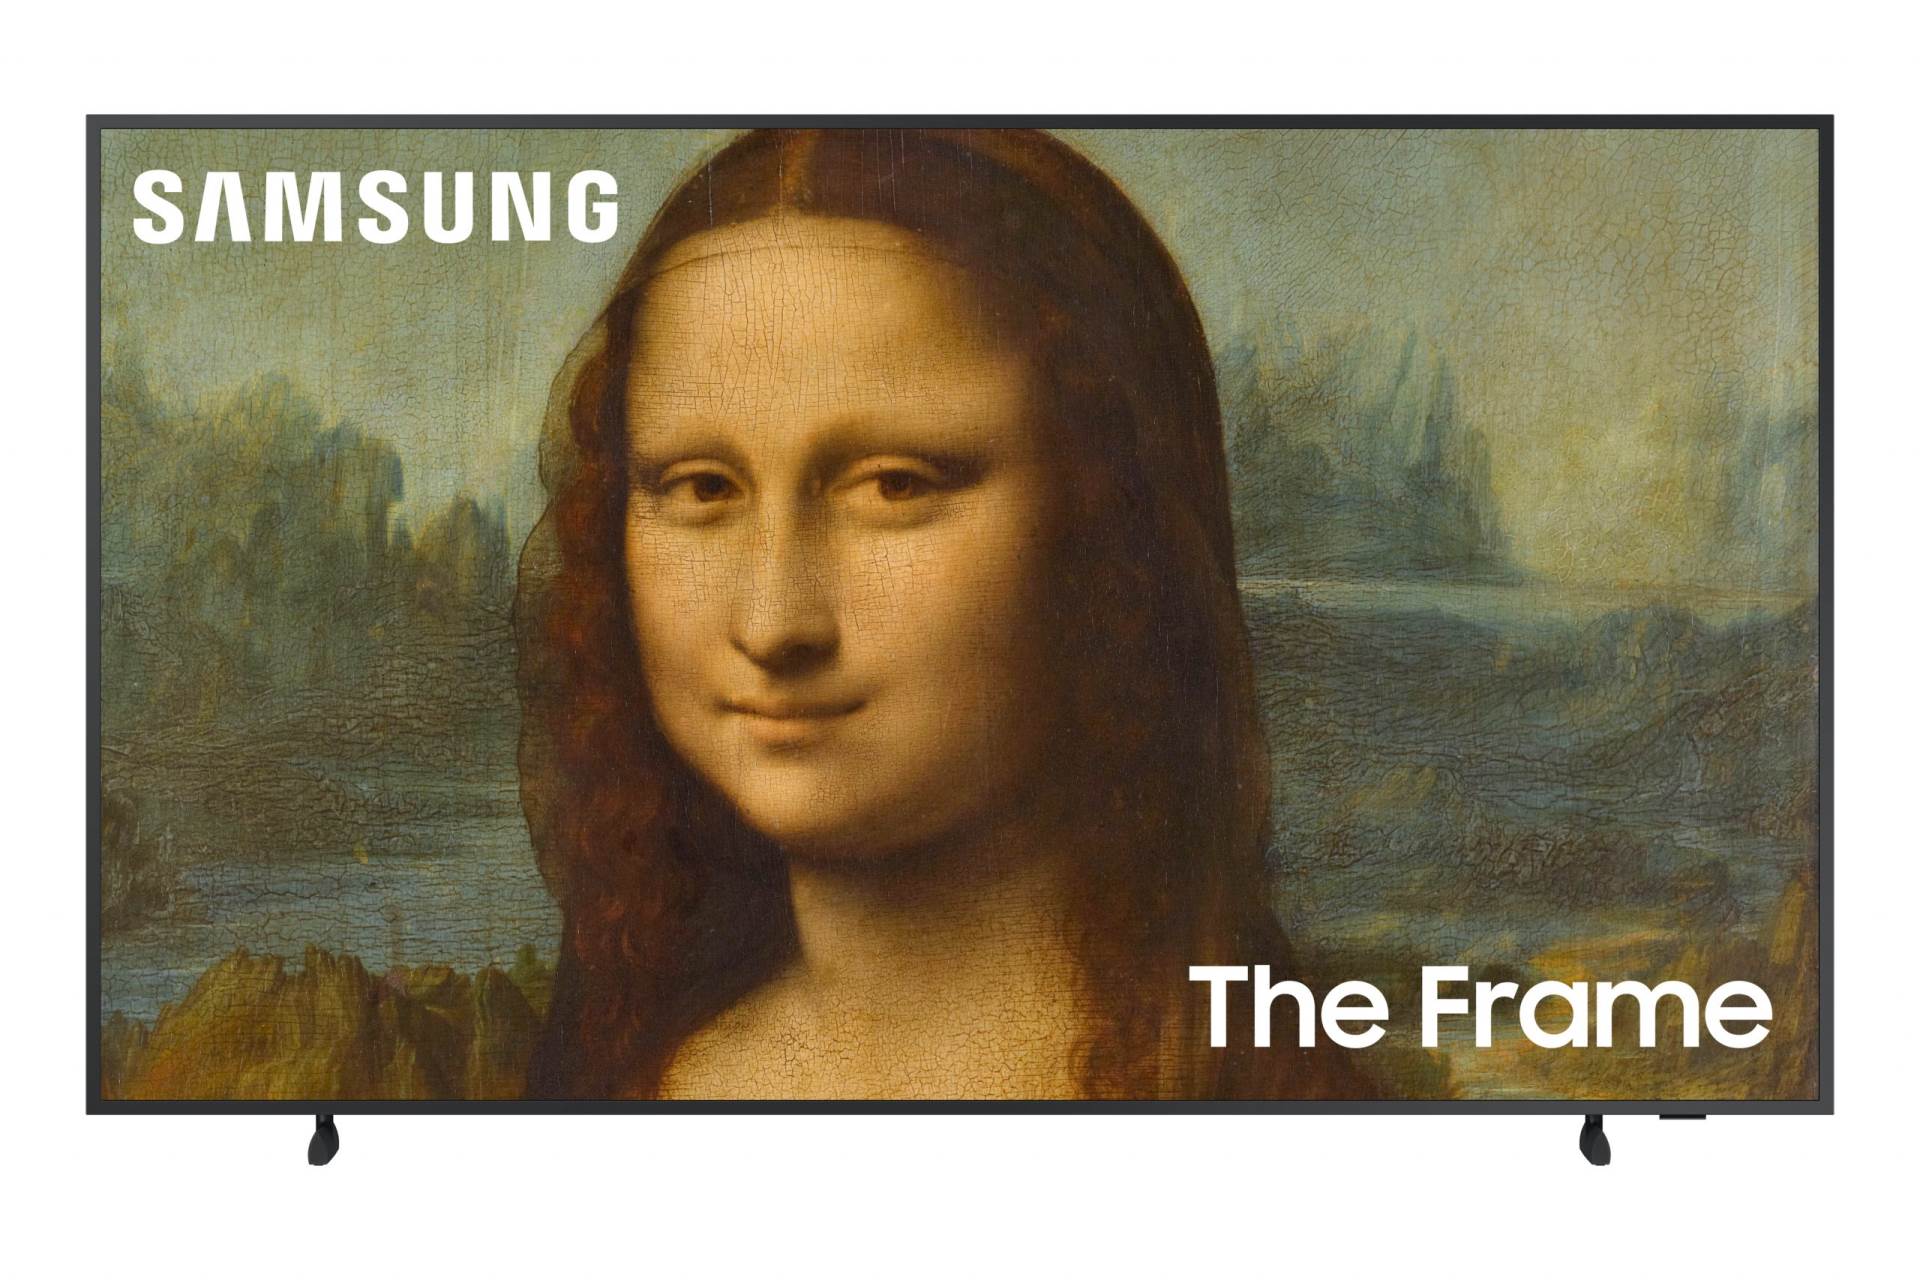  Samsung The Frame.jpg 